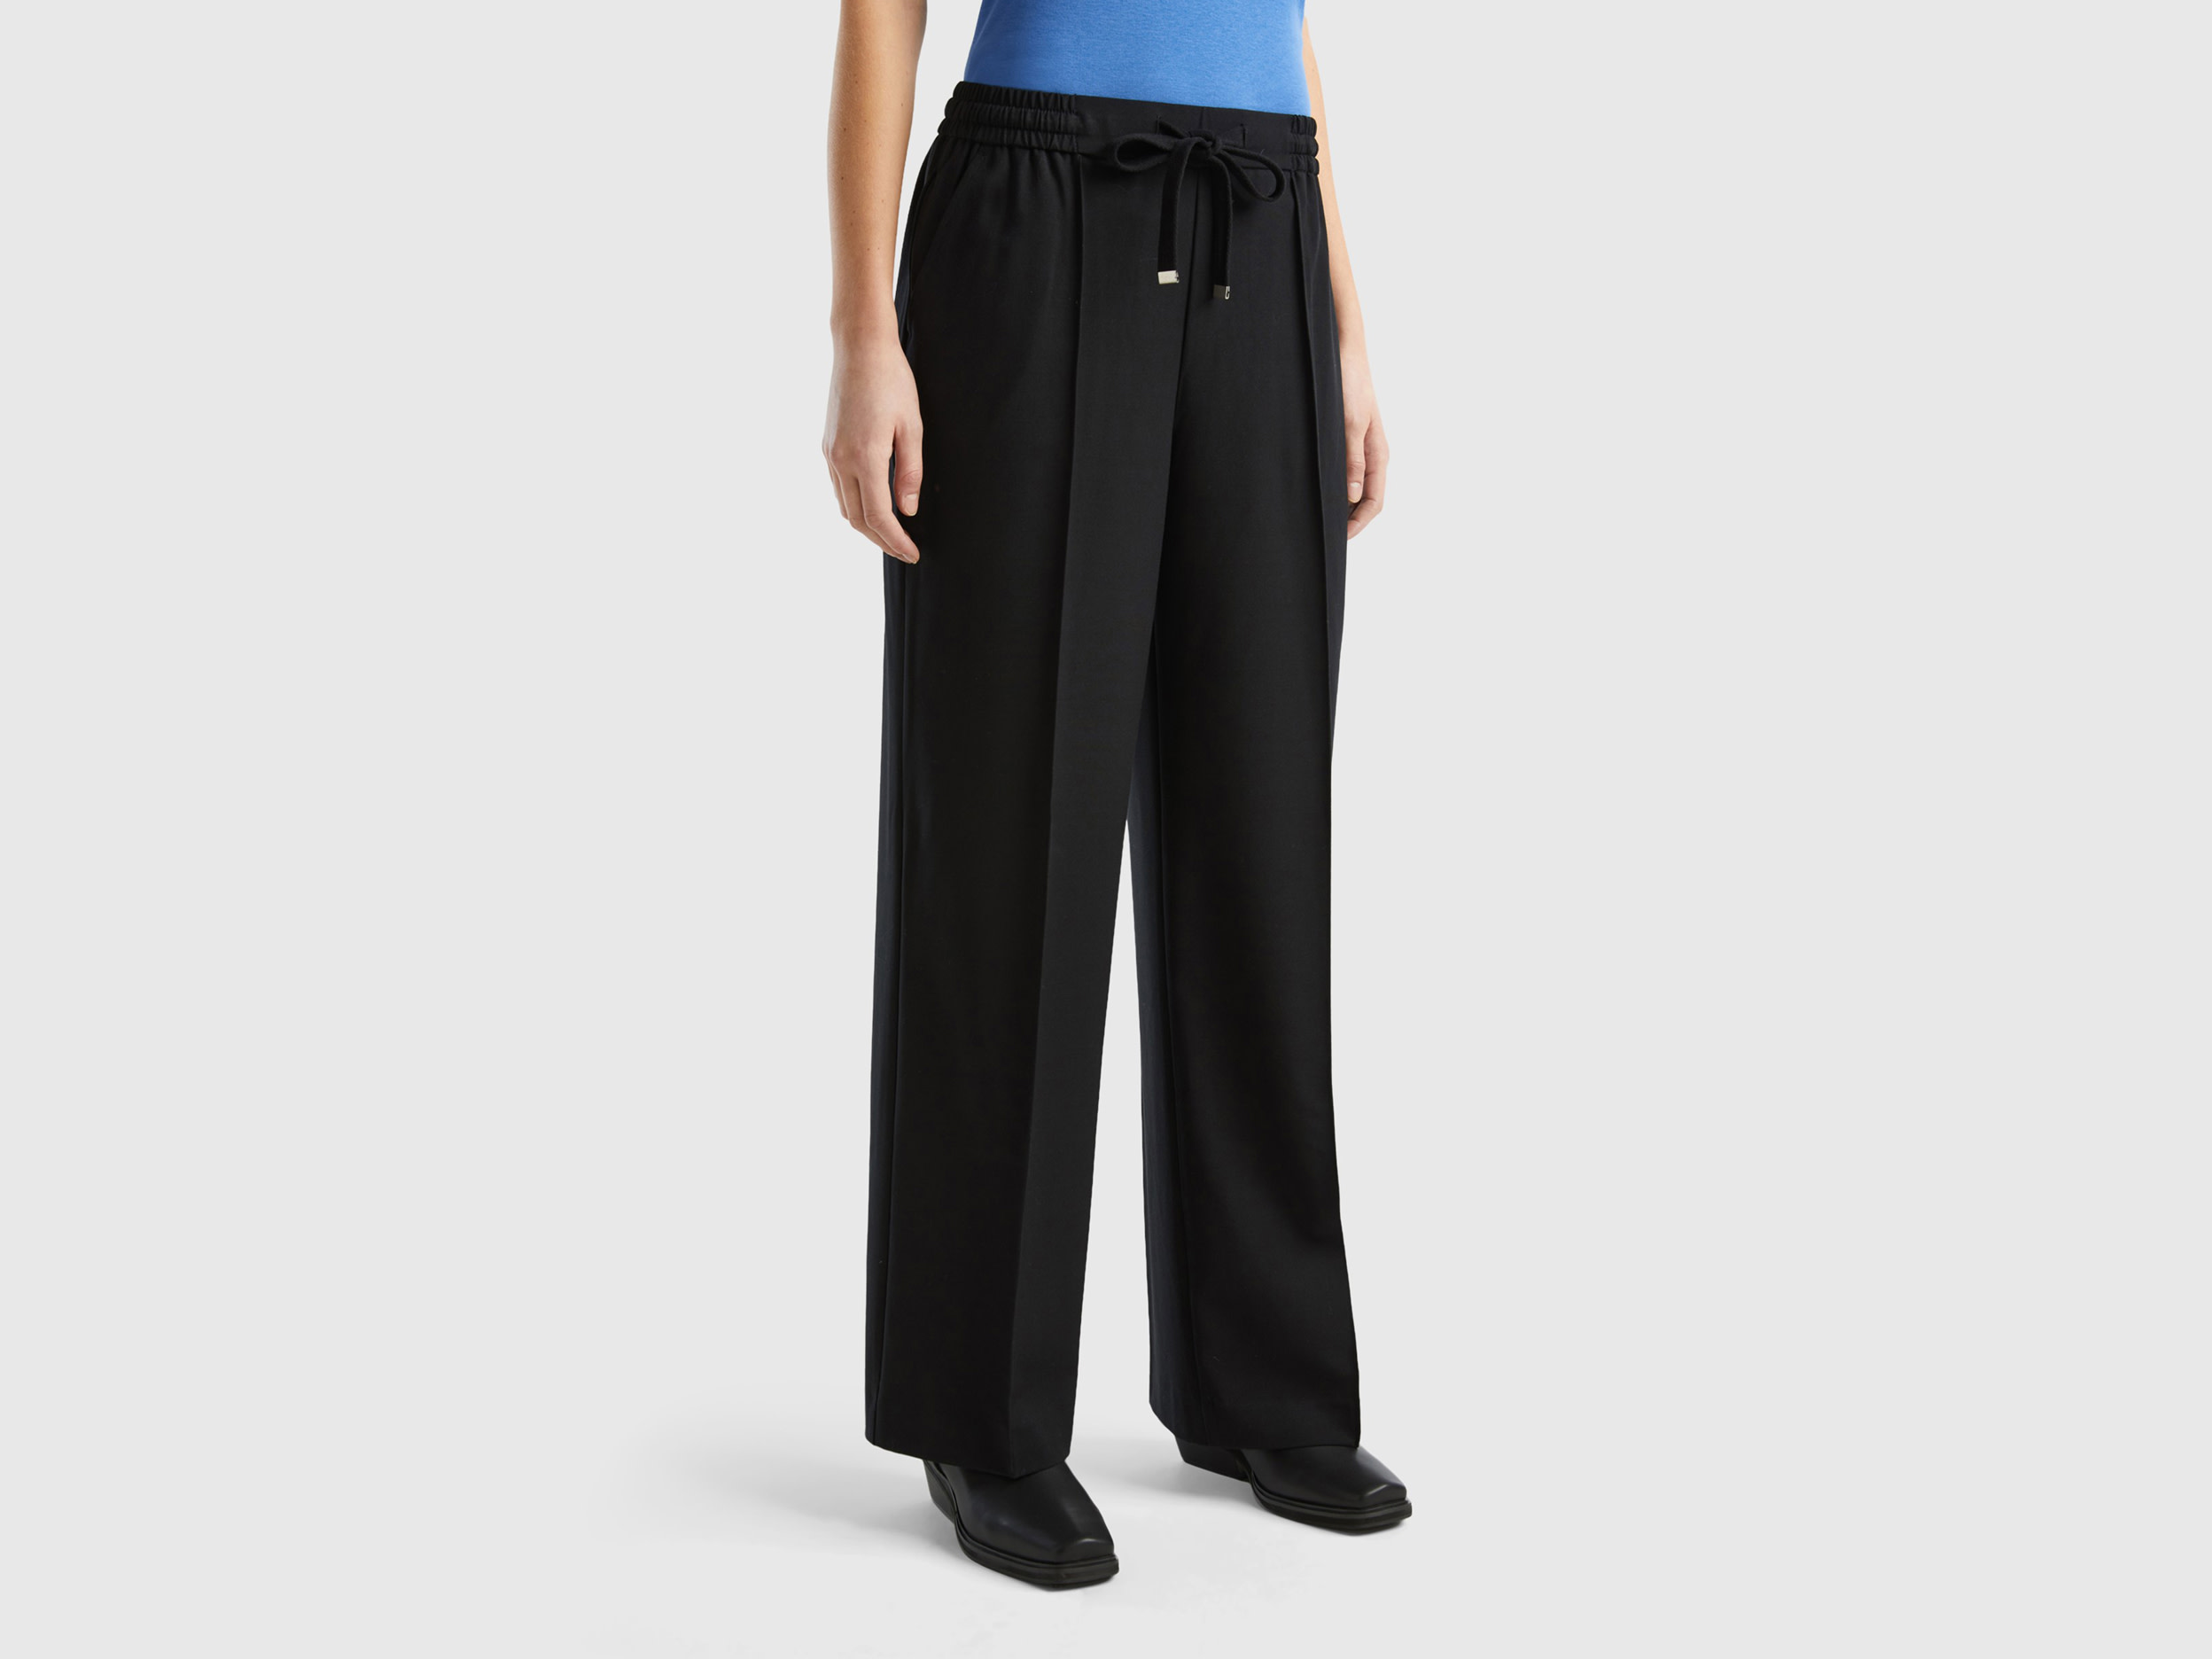 Benetton, Flowy Trousers With Drawstring, size M, Black, Women